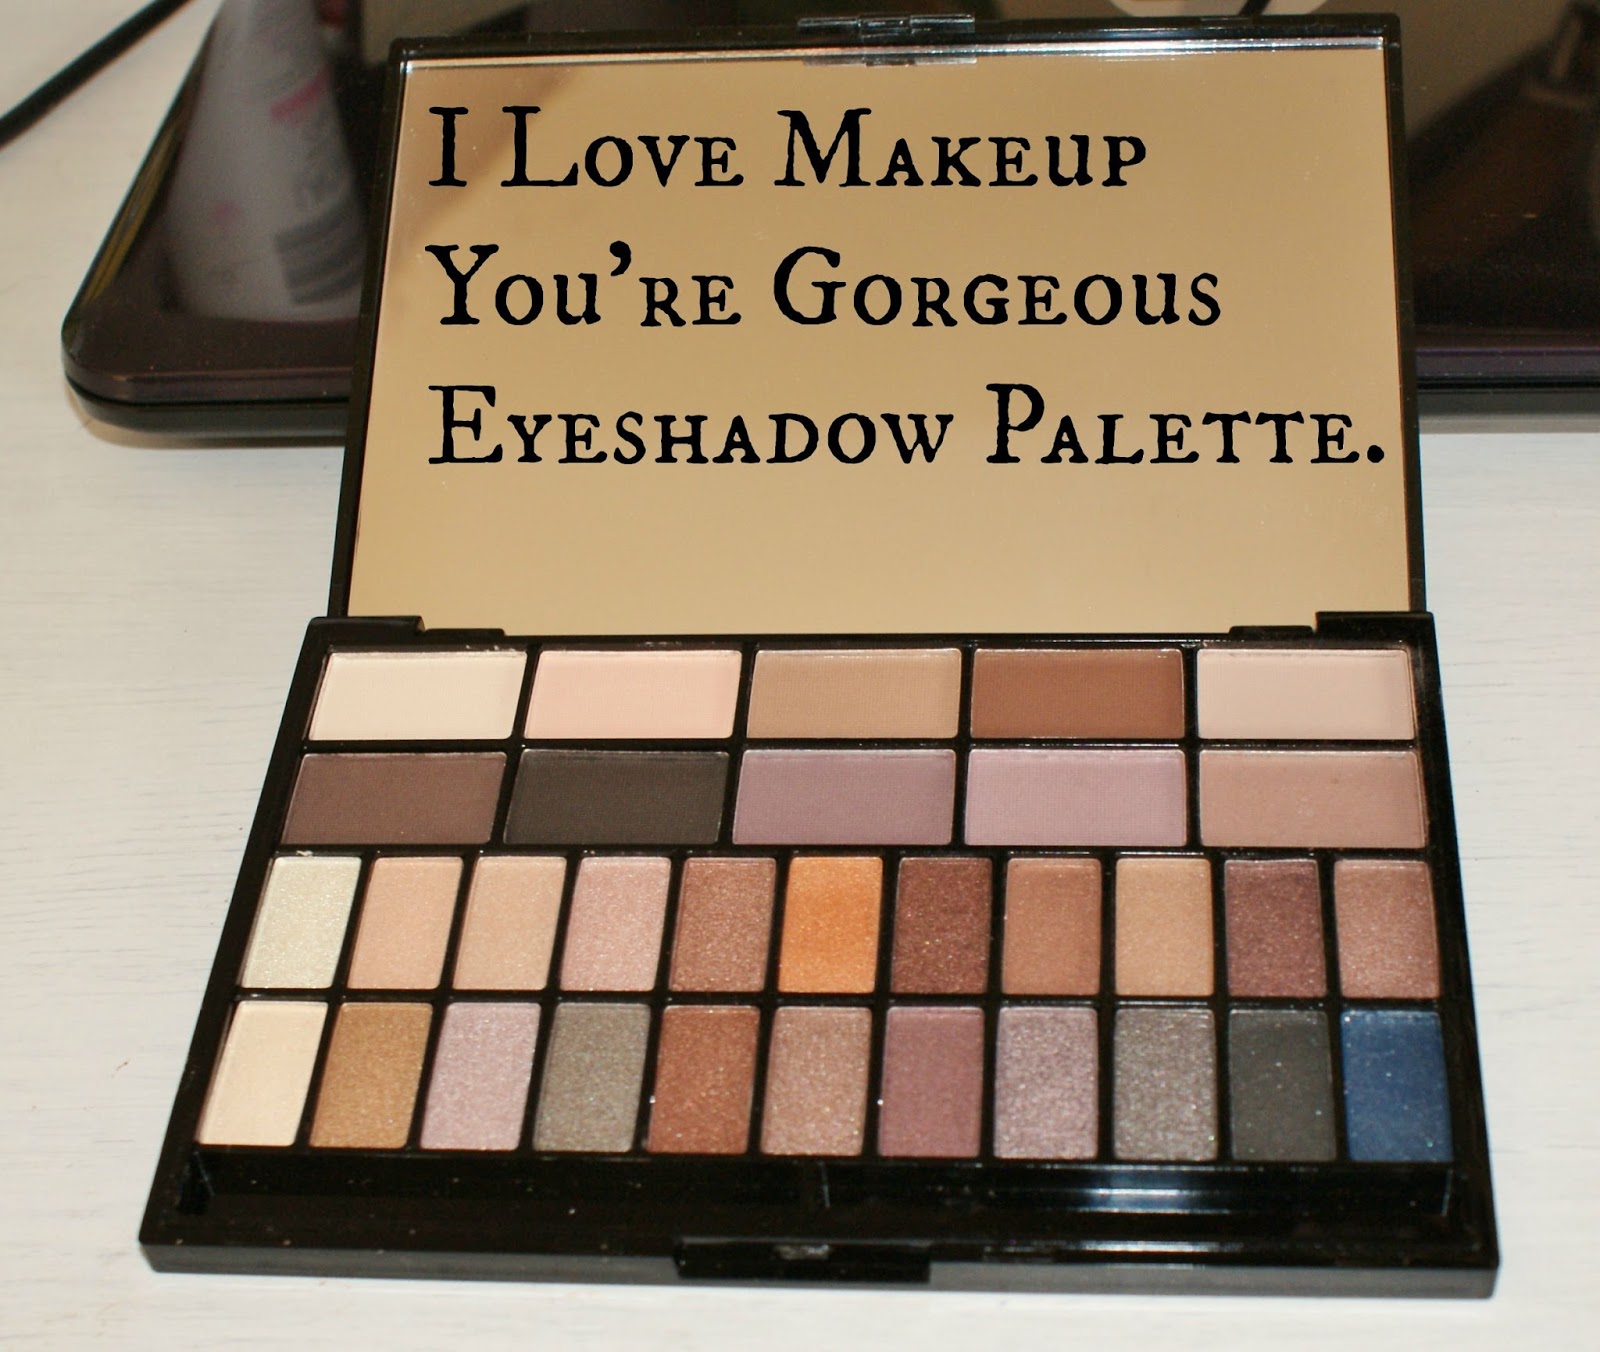 I love makeup revolution